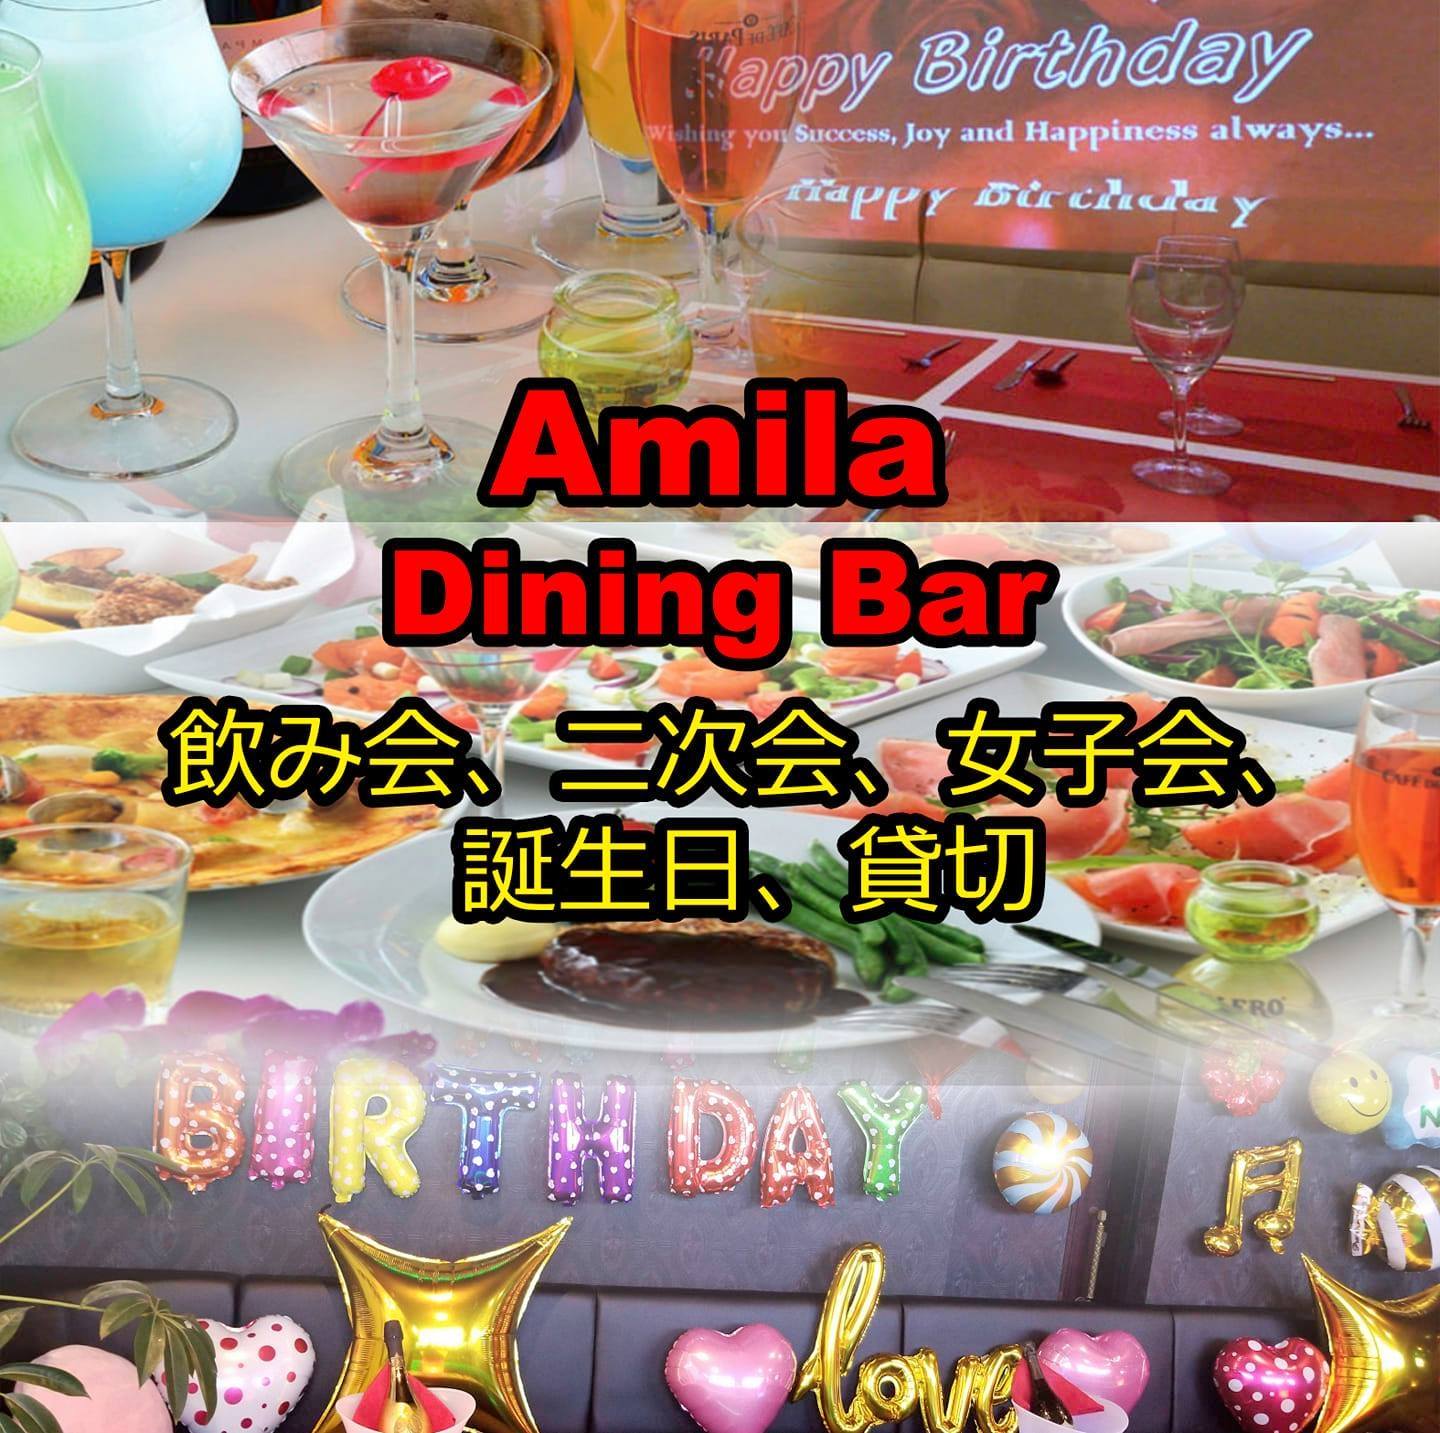 Dining Bar Amila 京都 シーシャ 水たばこ